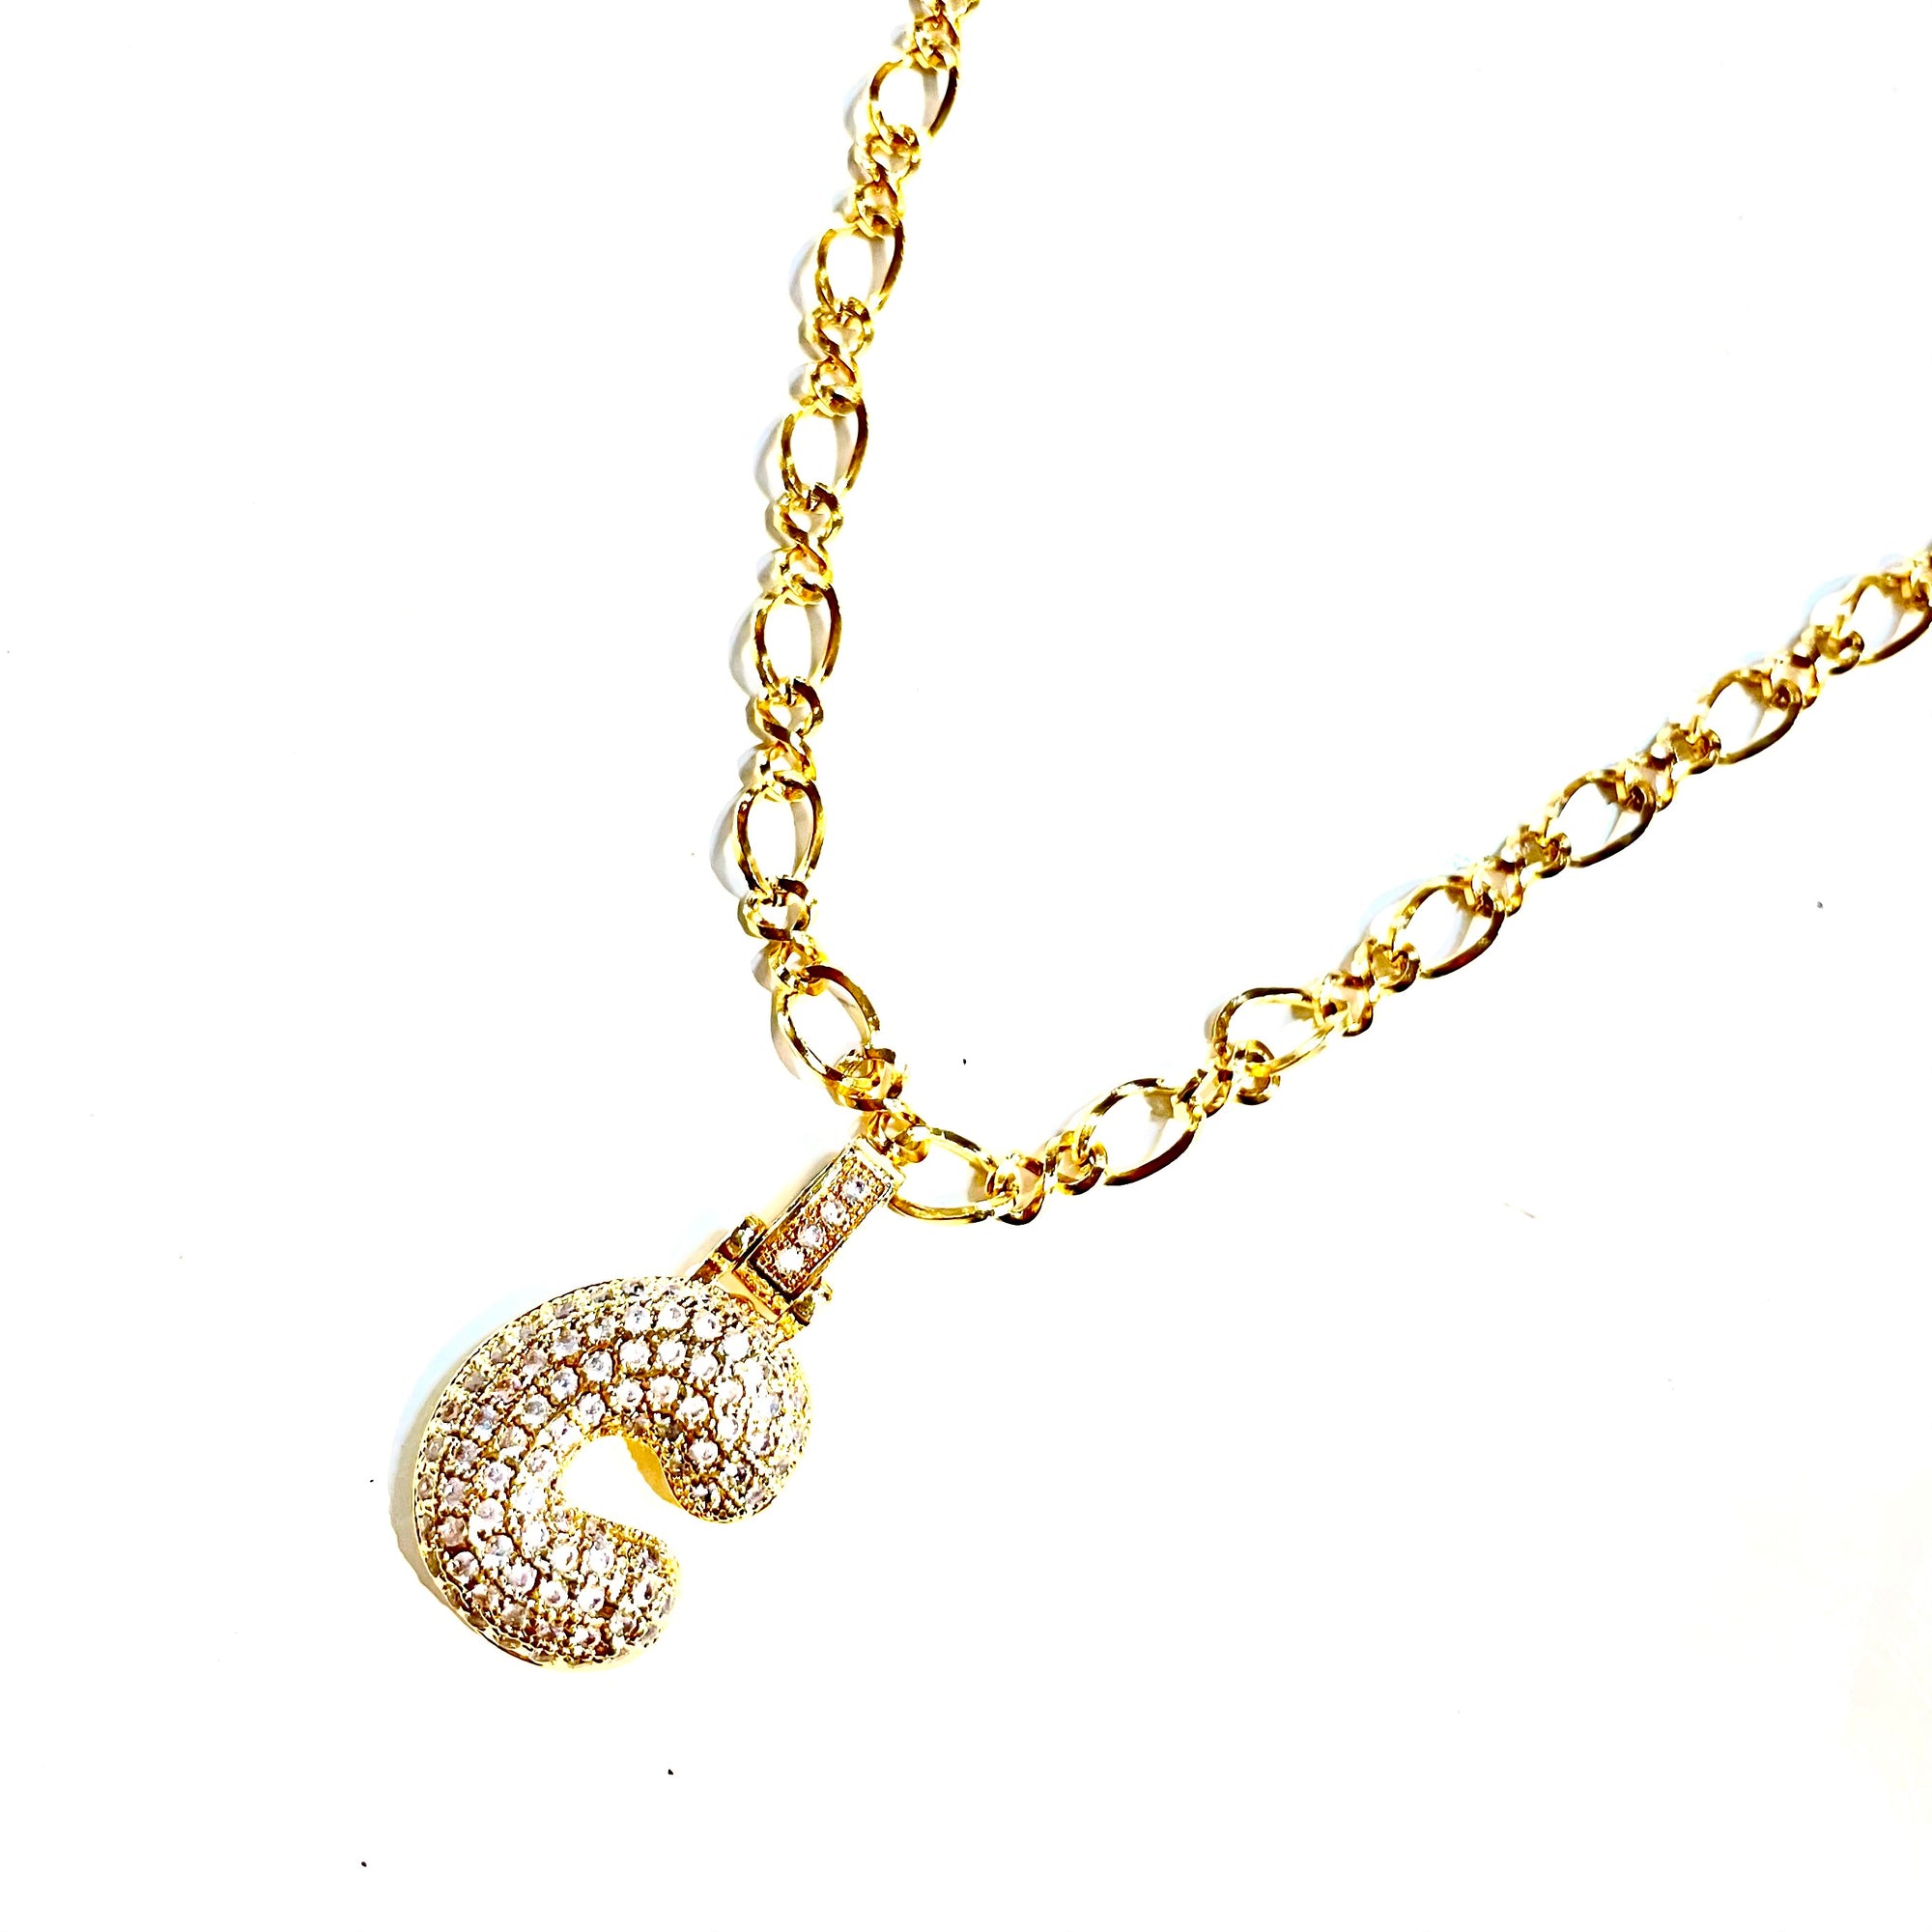 Initial Impression Necklace Necklaces Cerese D, Inc. Gold C 